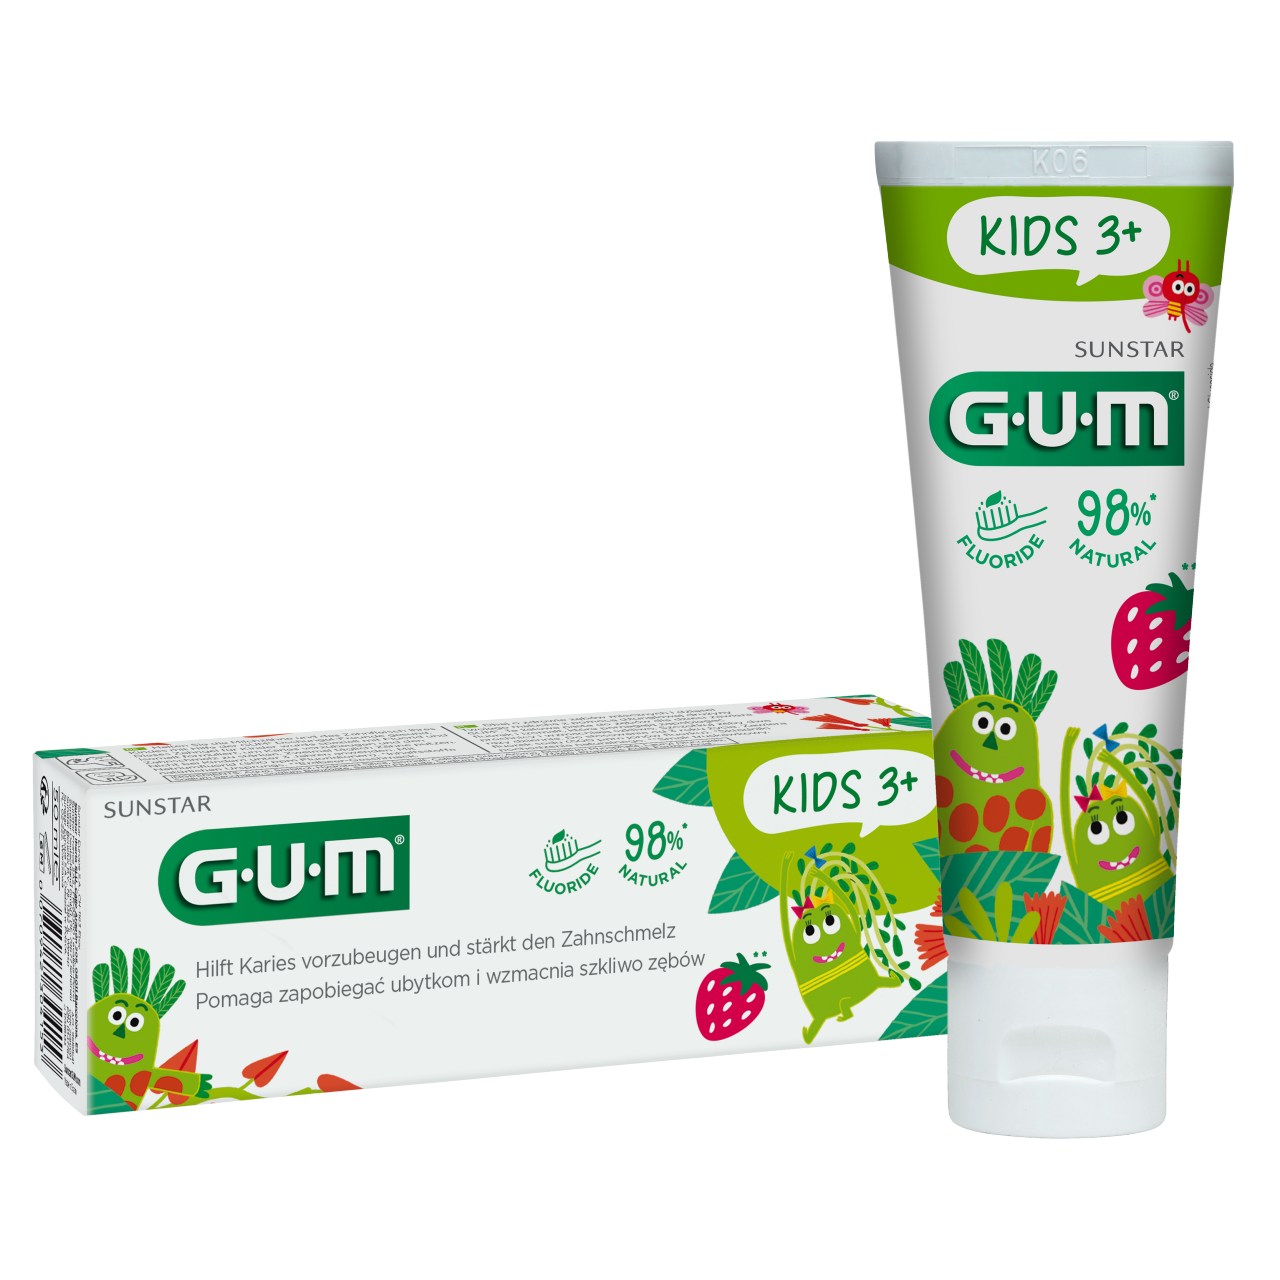 3000-DE-PL-GUM-KIDS-Toothpaste-50ml-Tube-Box-Mockup